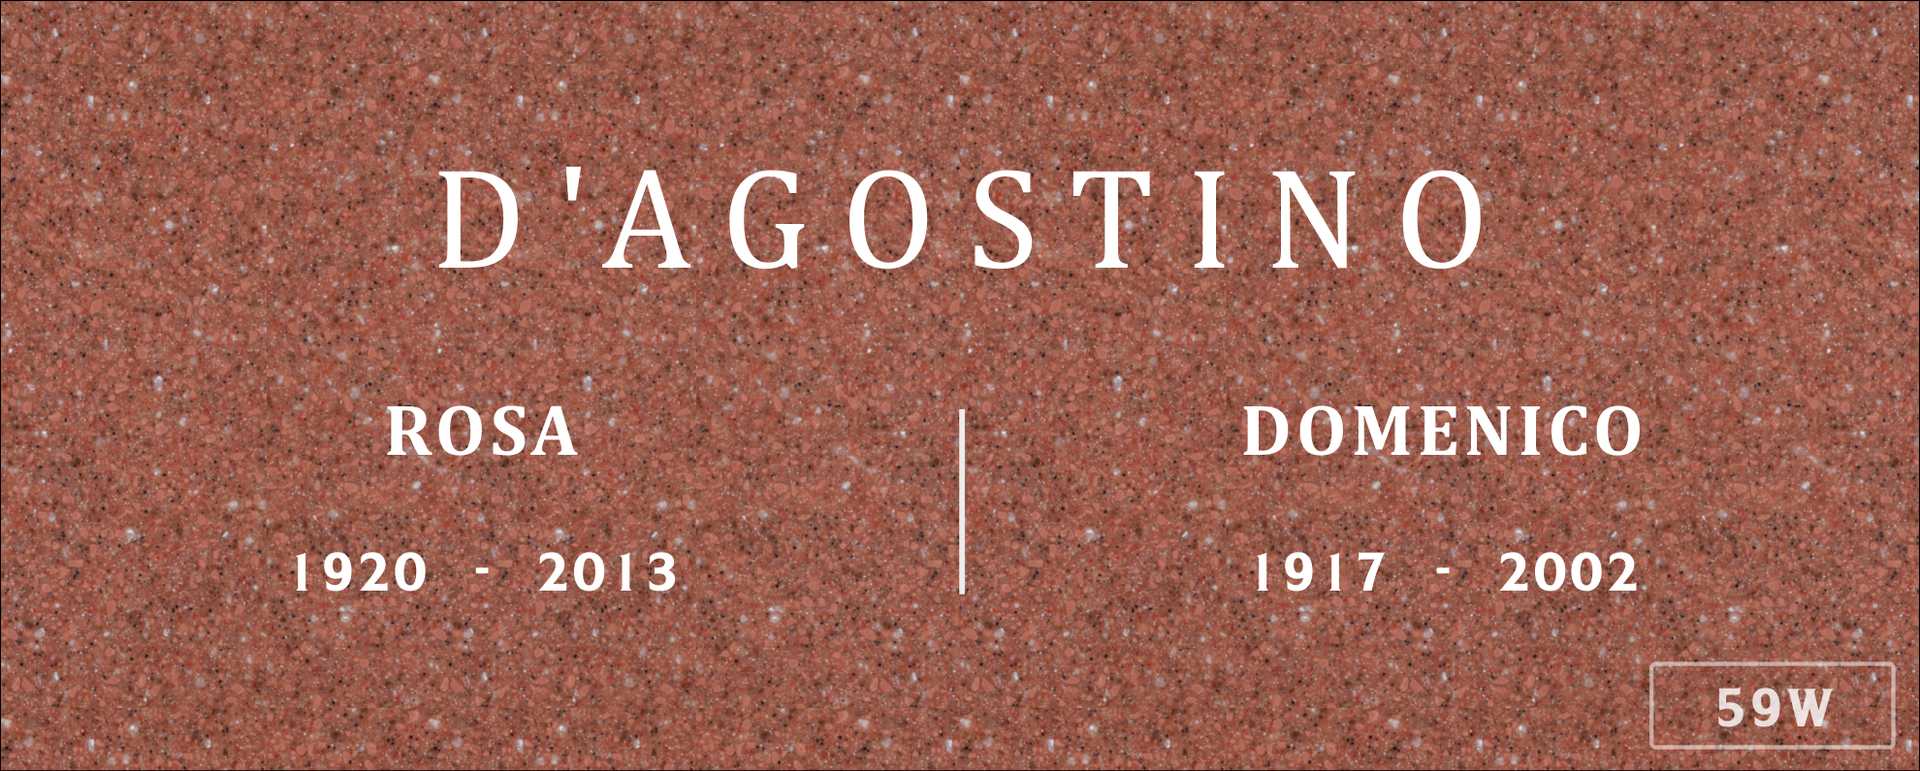 Rosa D''Agostino's grave